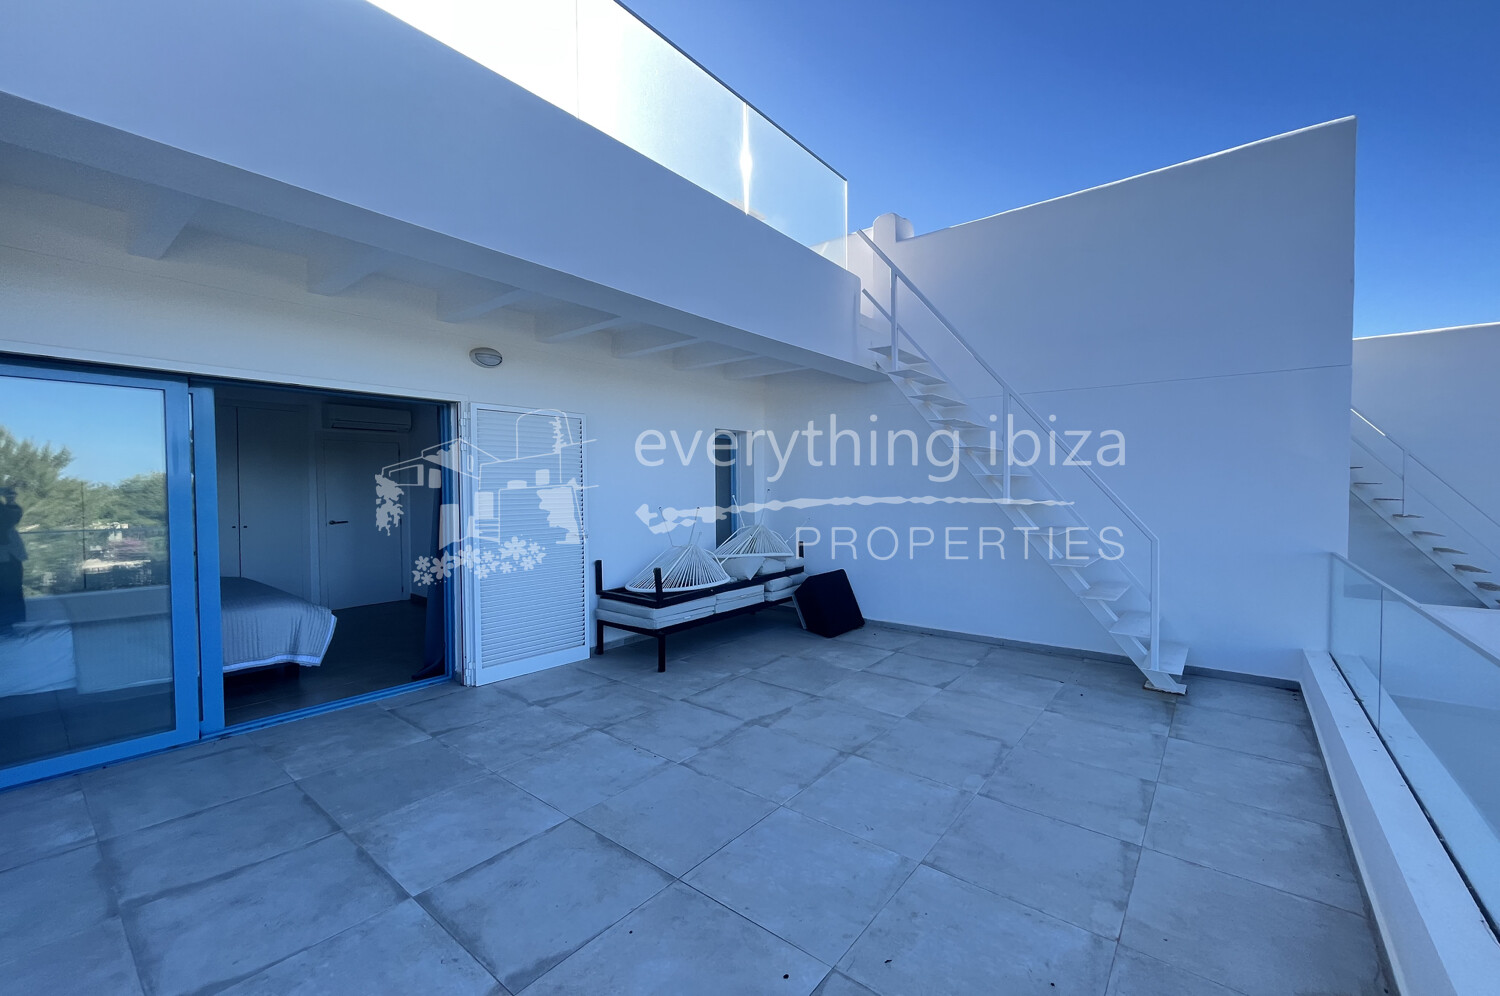 Modern Elegant 3 Bed Townhouse near Cala Tarida Beach, ref. 1530, for sale in Ibiza by everything ibiza Properties